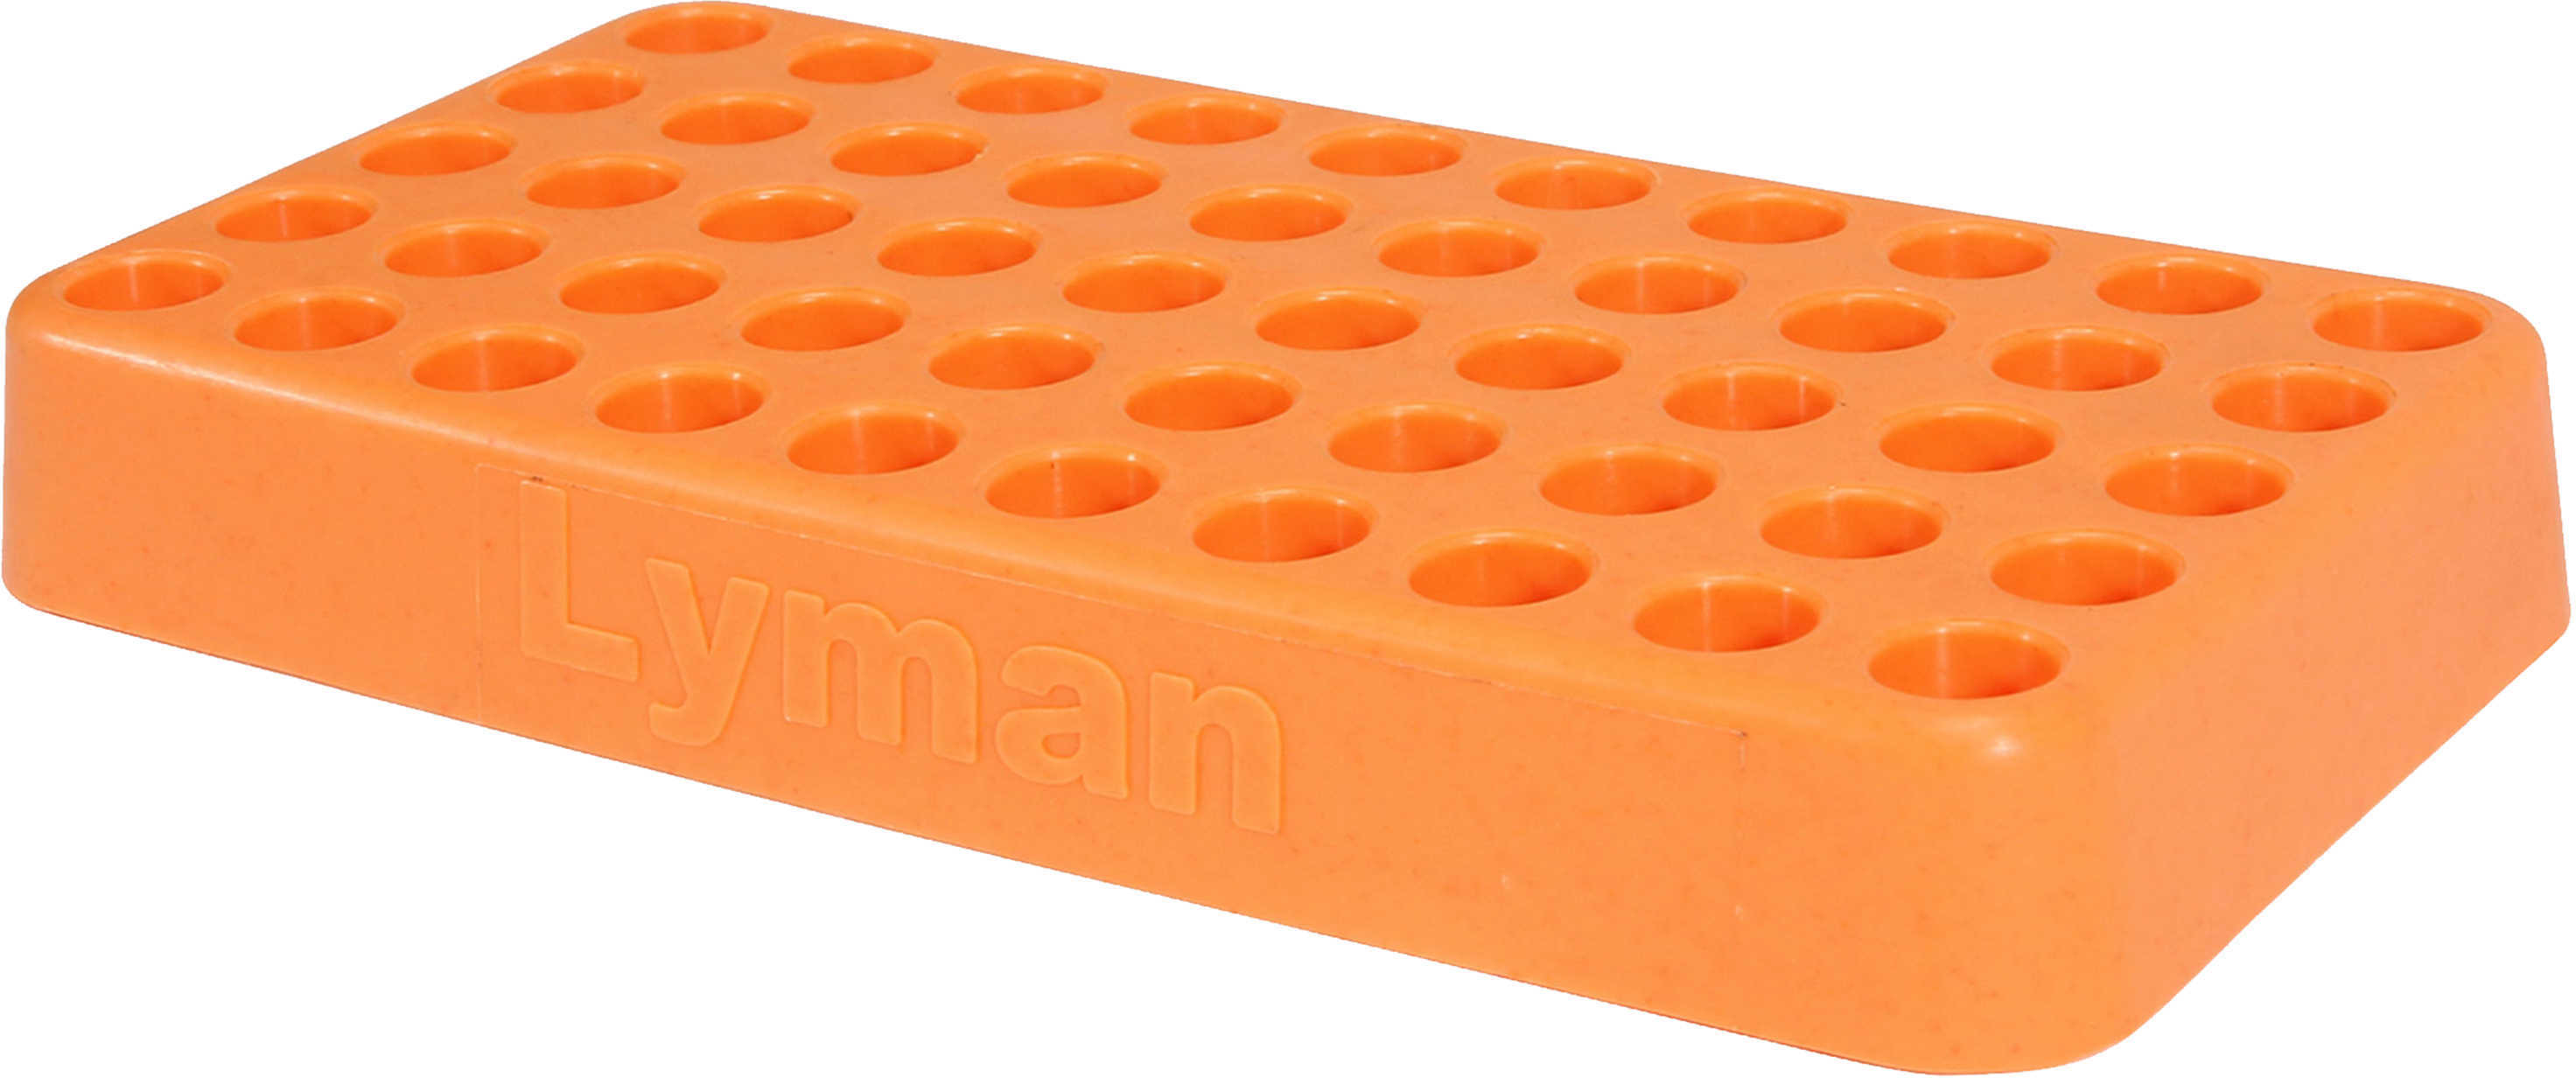 Lyman Custom Fit Loading Block .615 Hole Size Fits Select Calibers